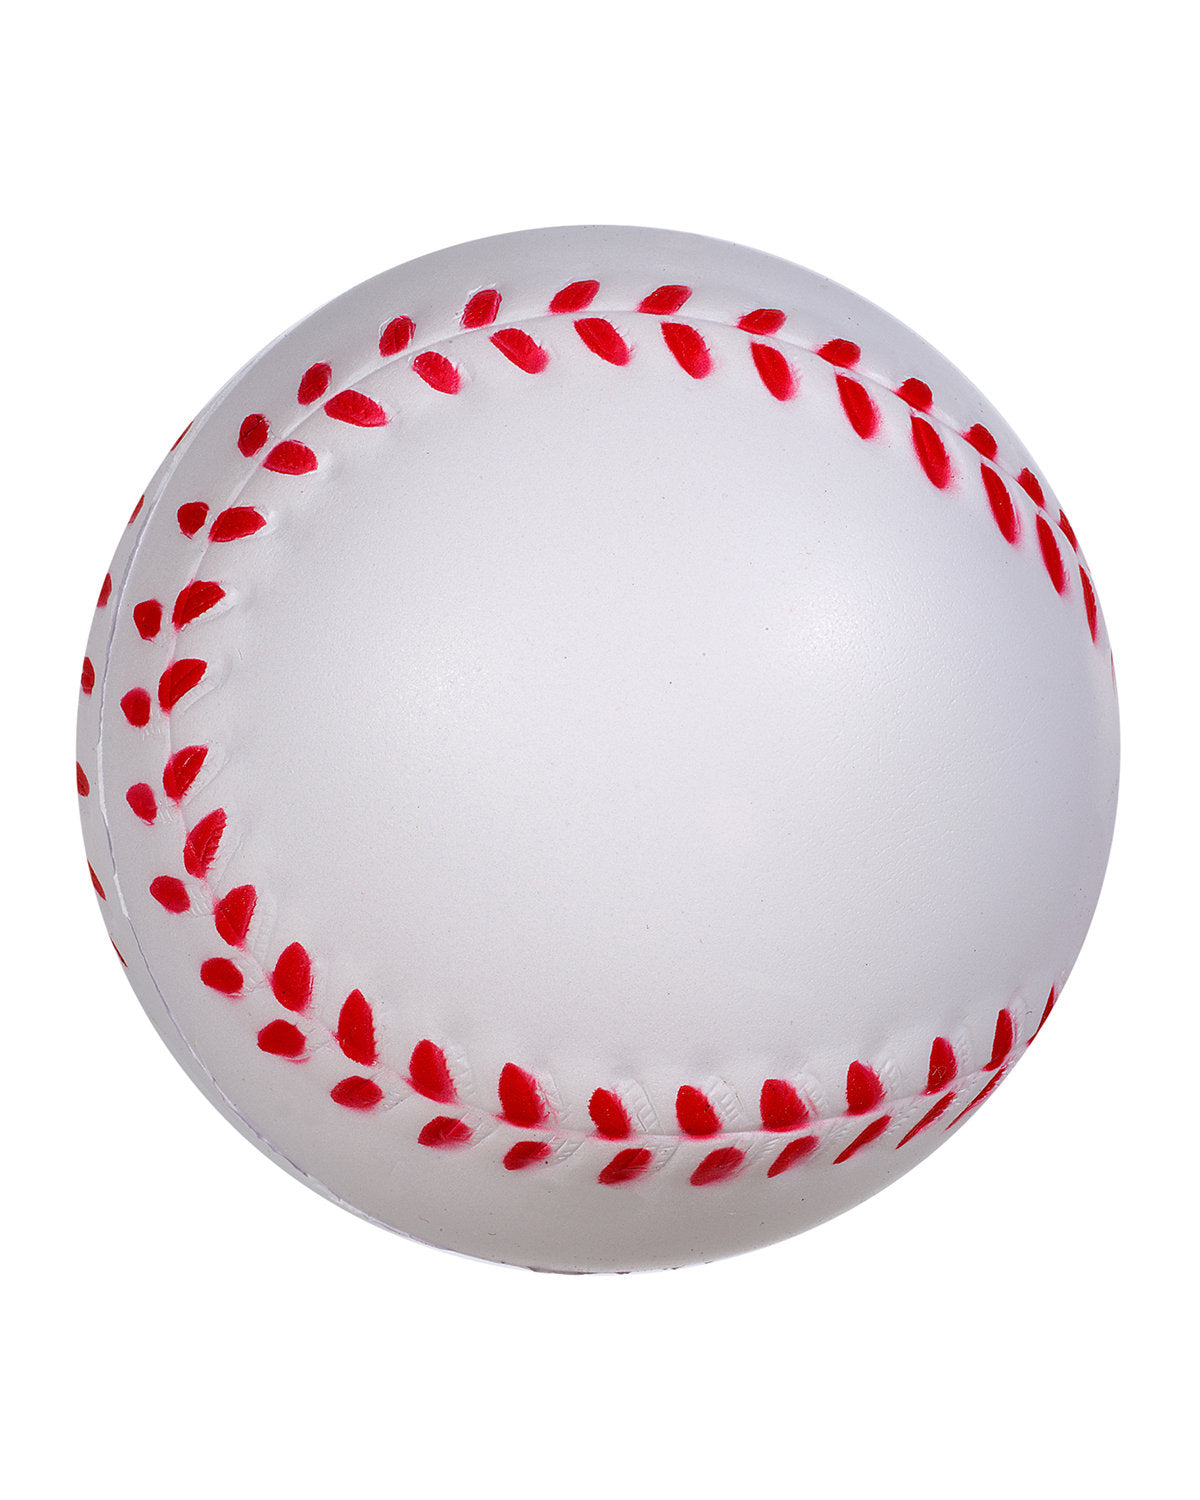 Baseball Super Squish Stress Reliever